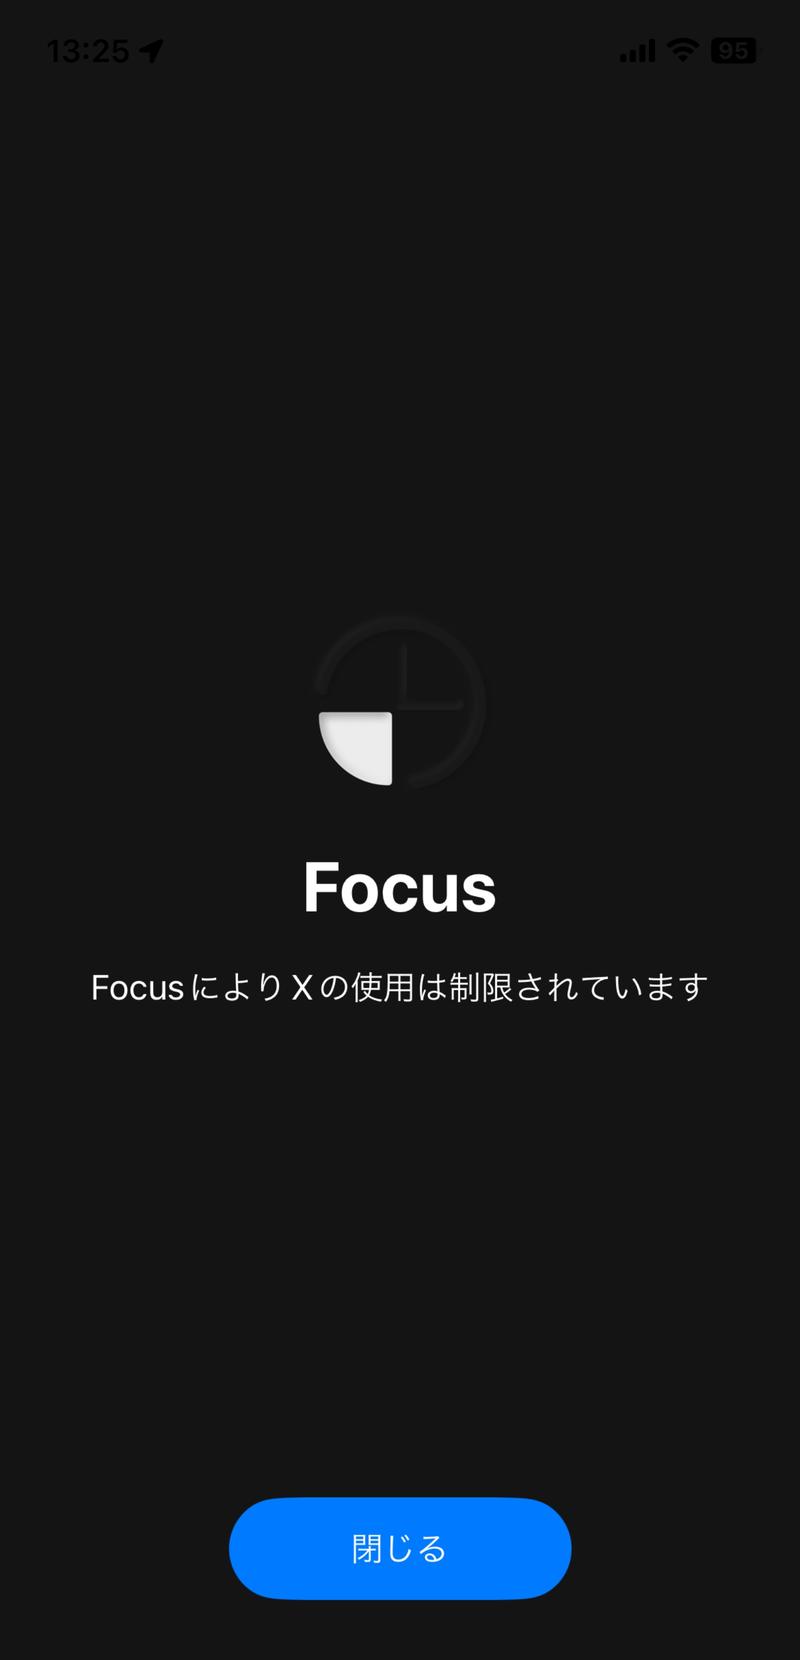 Screenshot: Yukiko Kamata via Focus